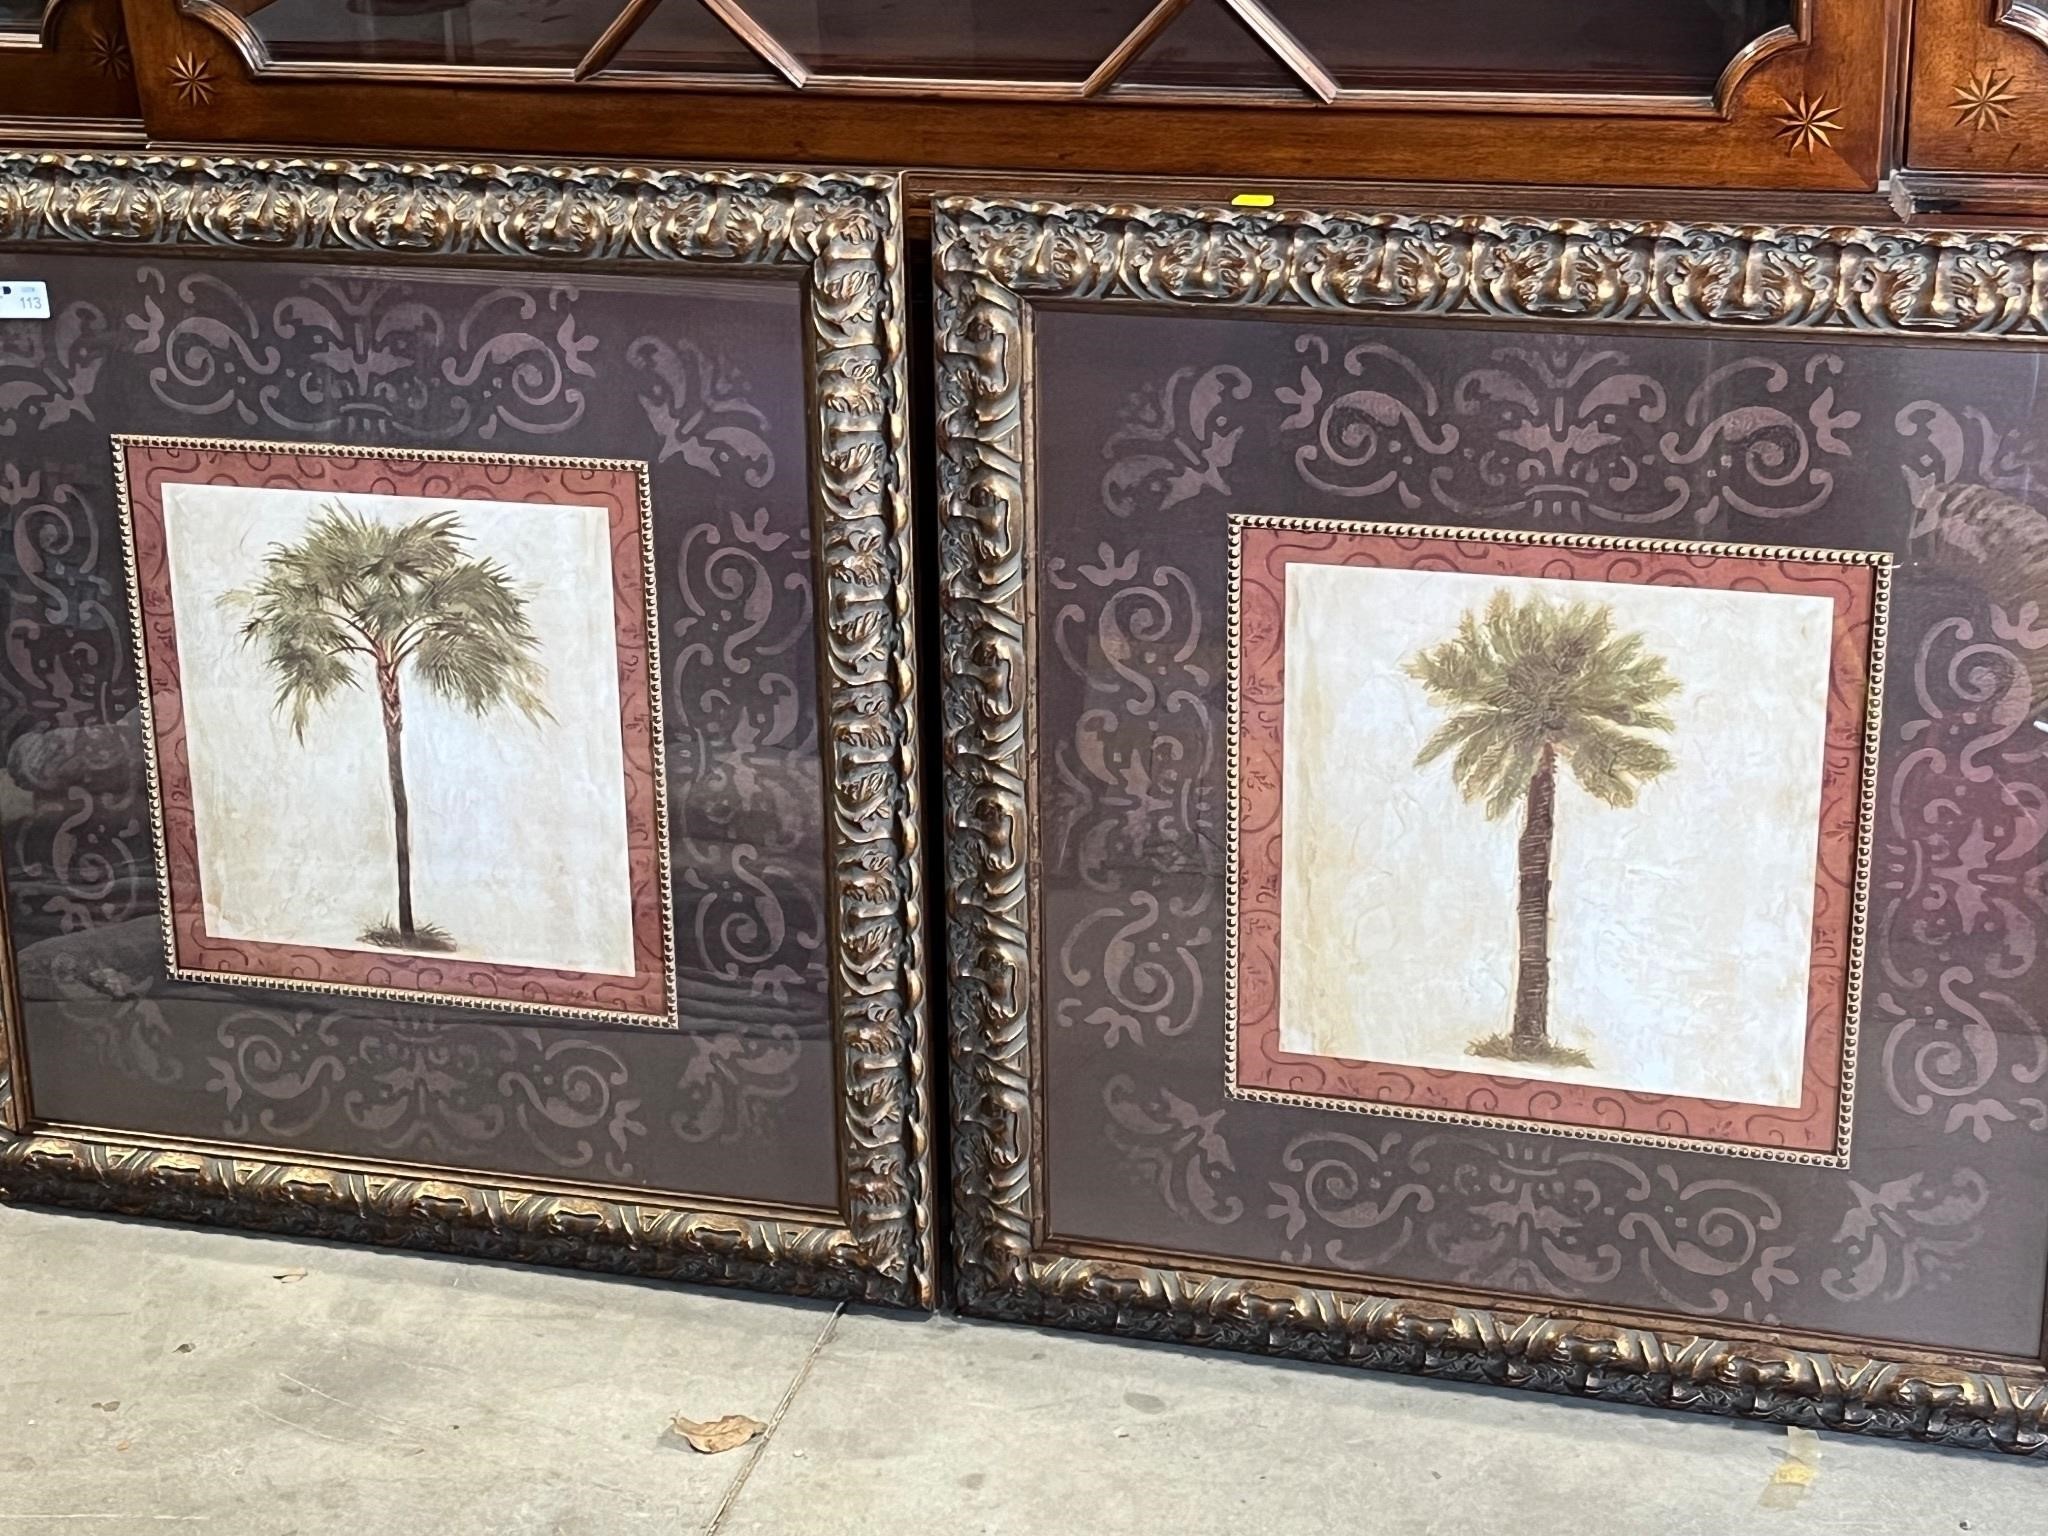 Pair of Palm Tree Prints